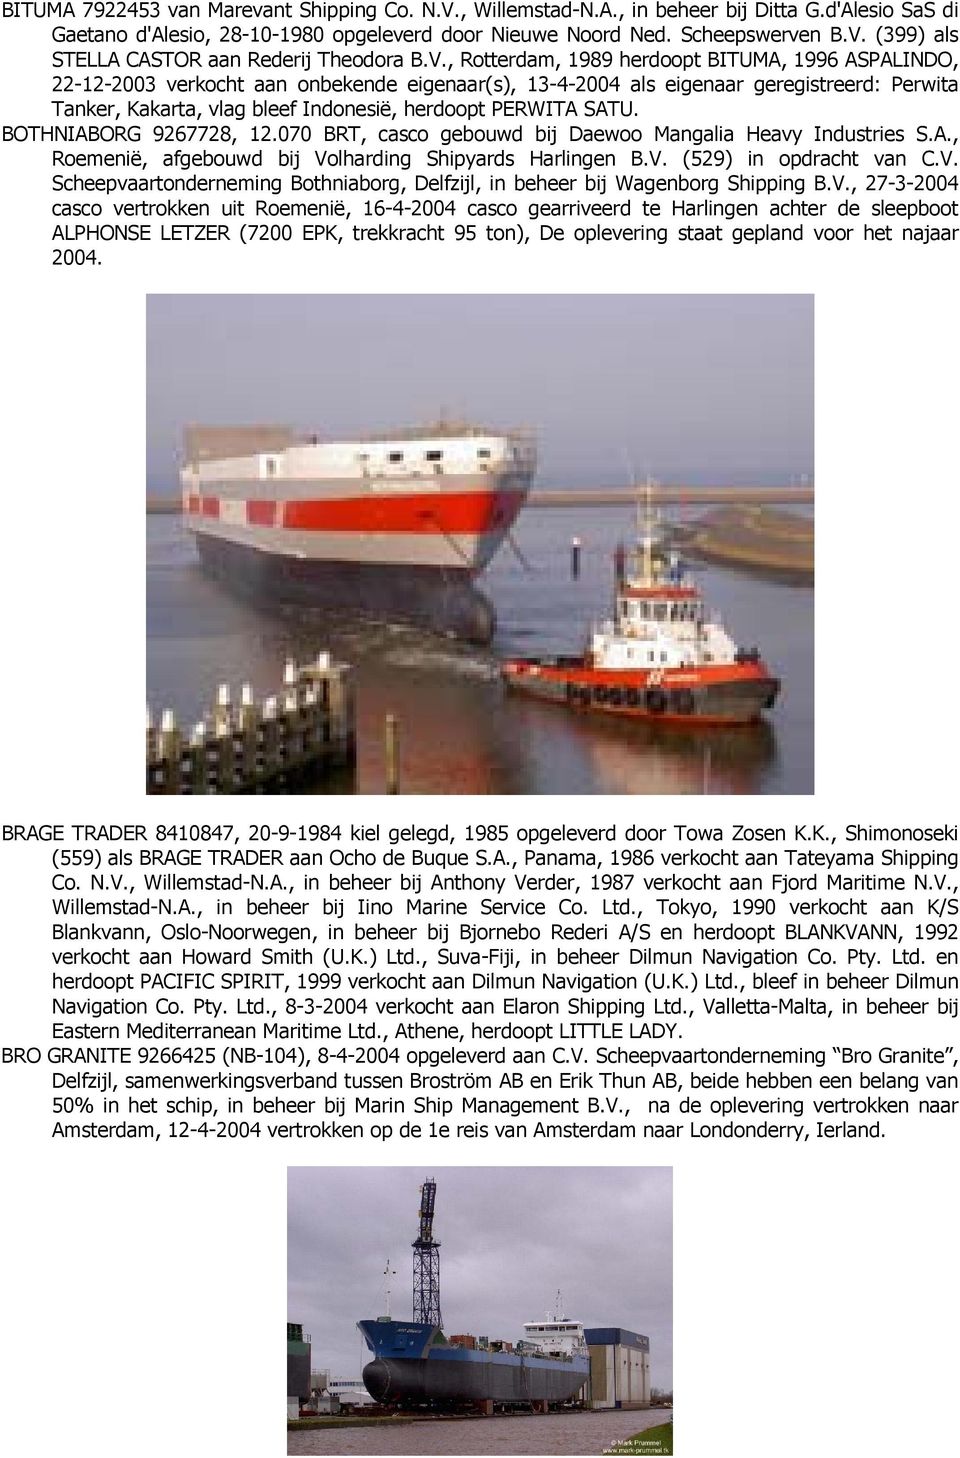 PERWITA SATU. BOTHNIABORG 9267728, 12.070 BRT, casco gebouwd bij Daewoo Mangalia Heavy Industries S.A., Roemenië, afgebouwd bij Vo